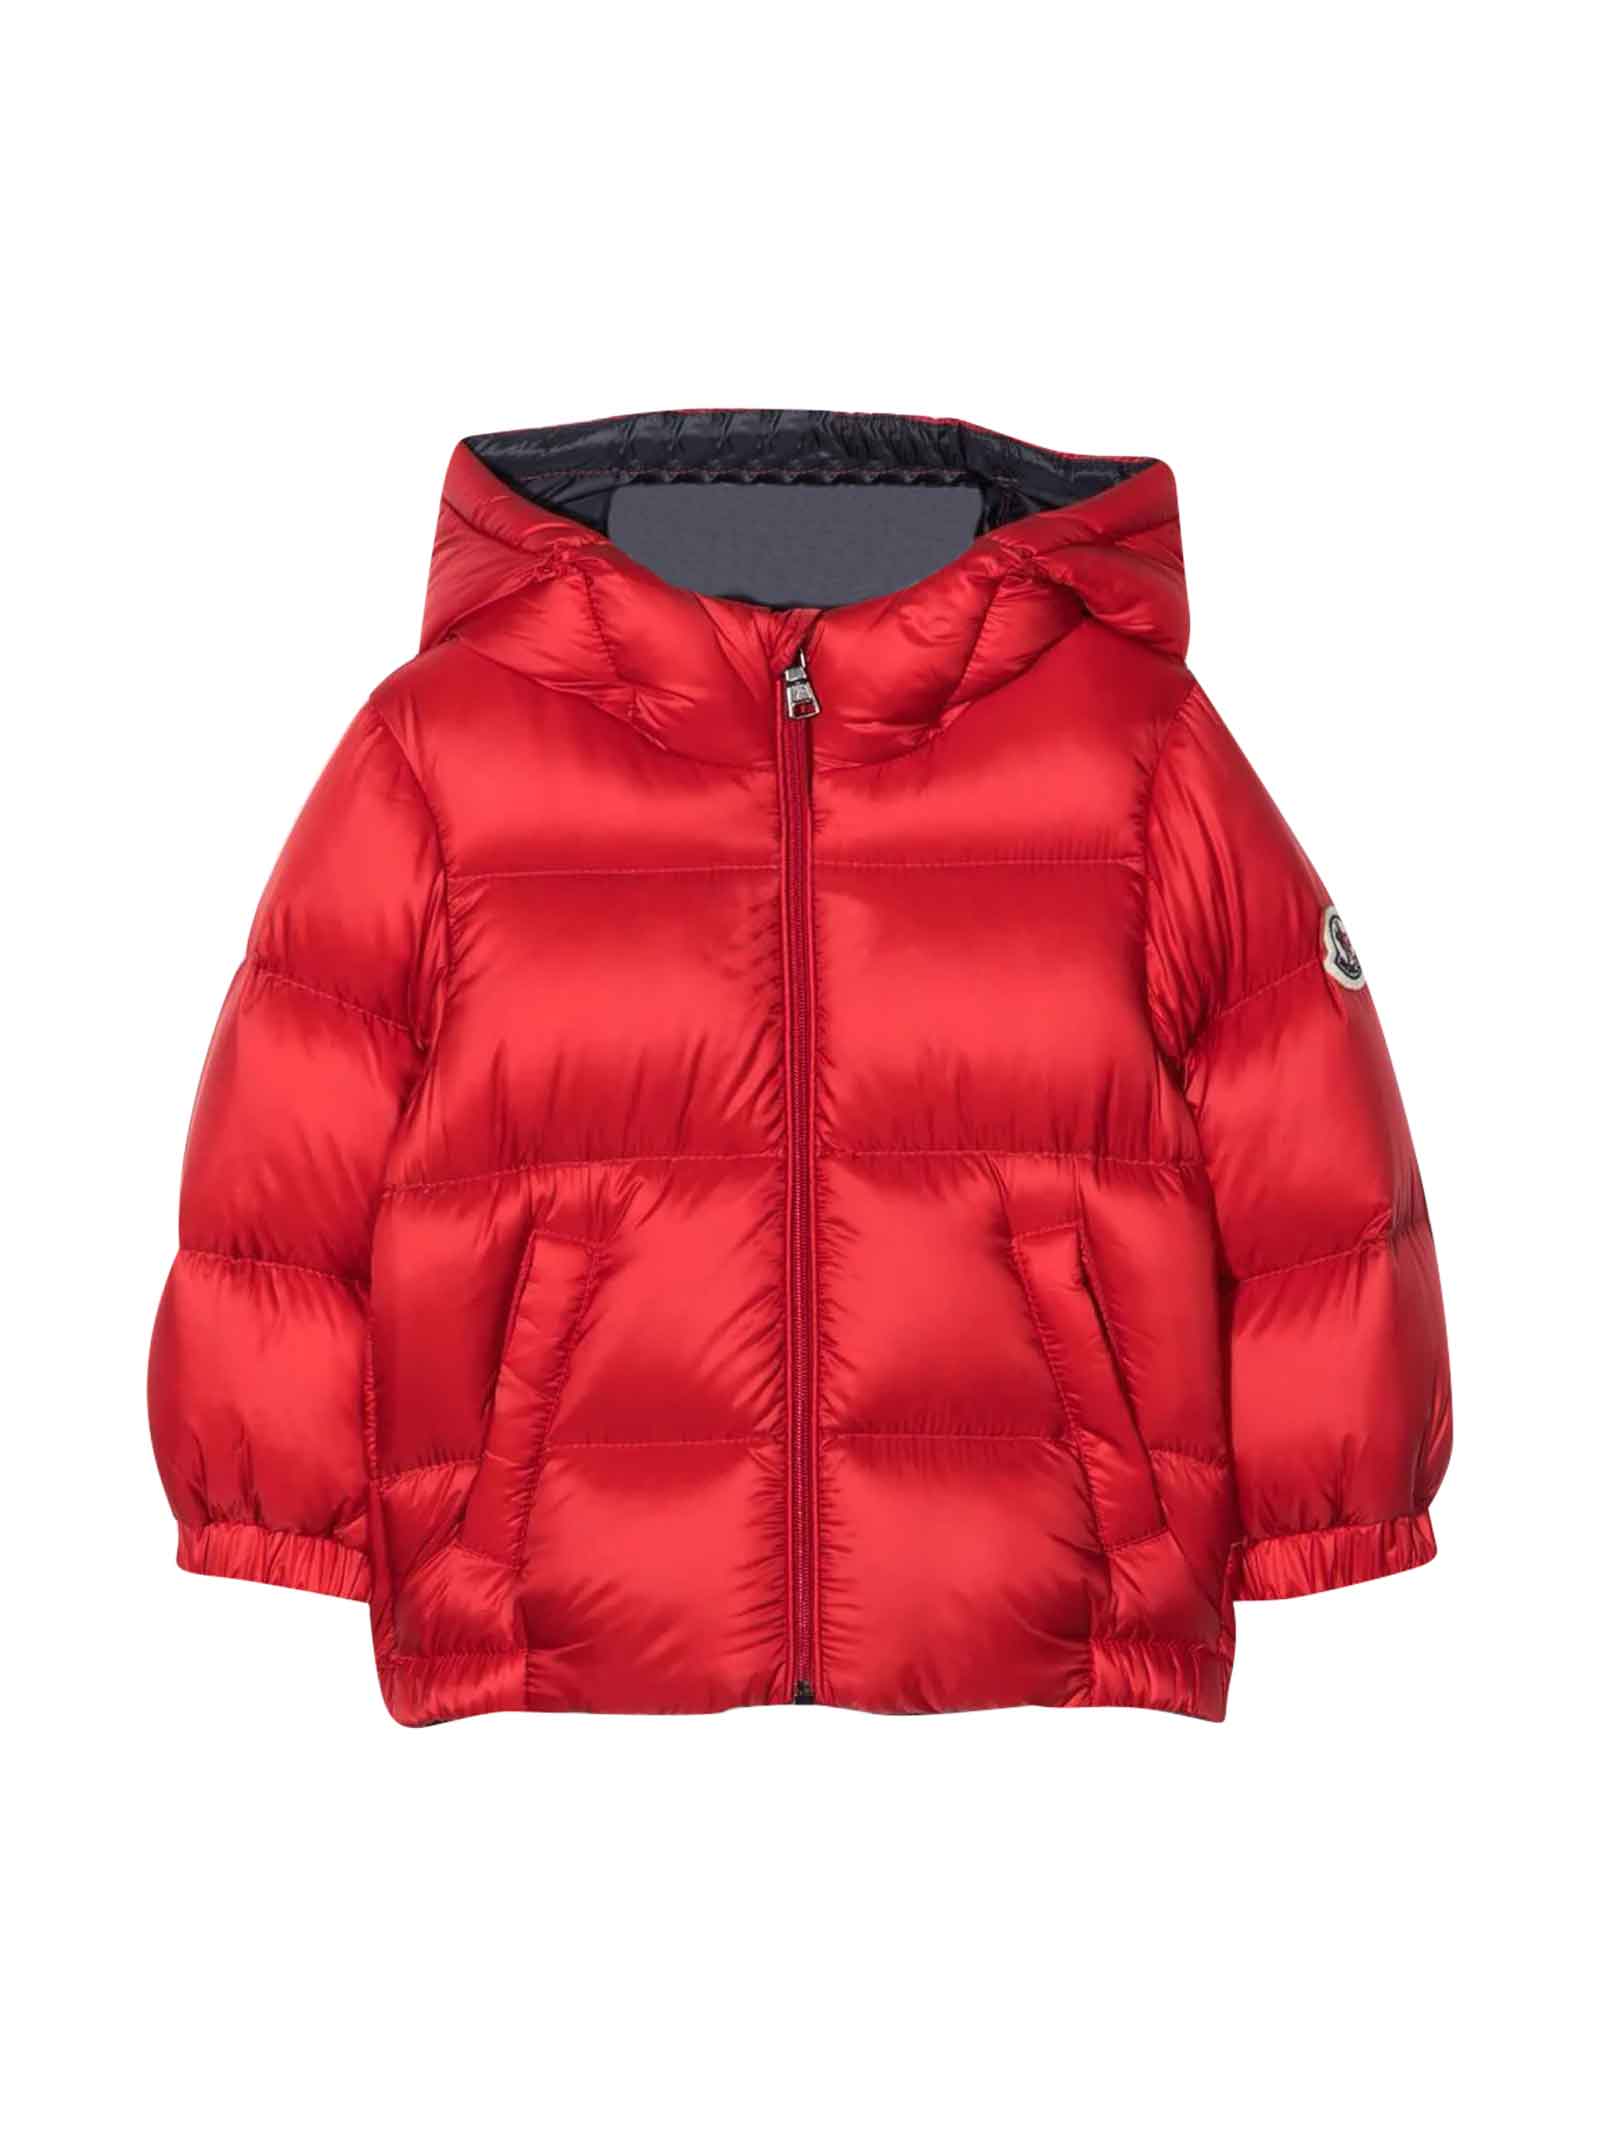 Moncler Red Jacket Baby Unisex